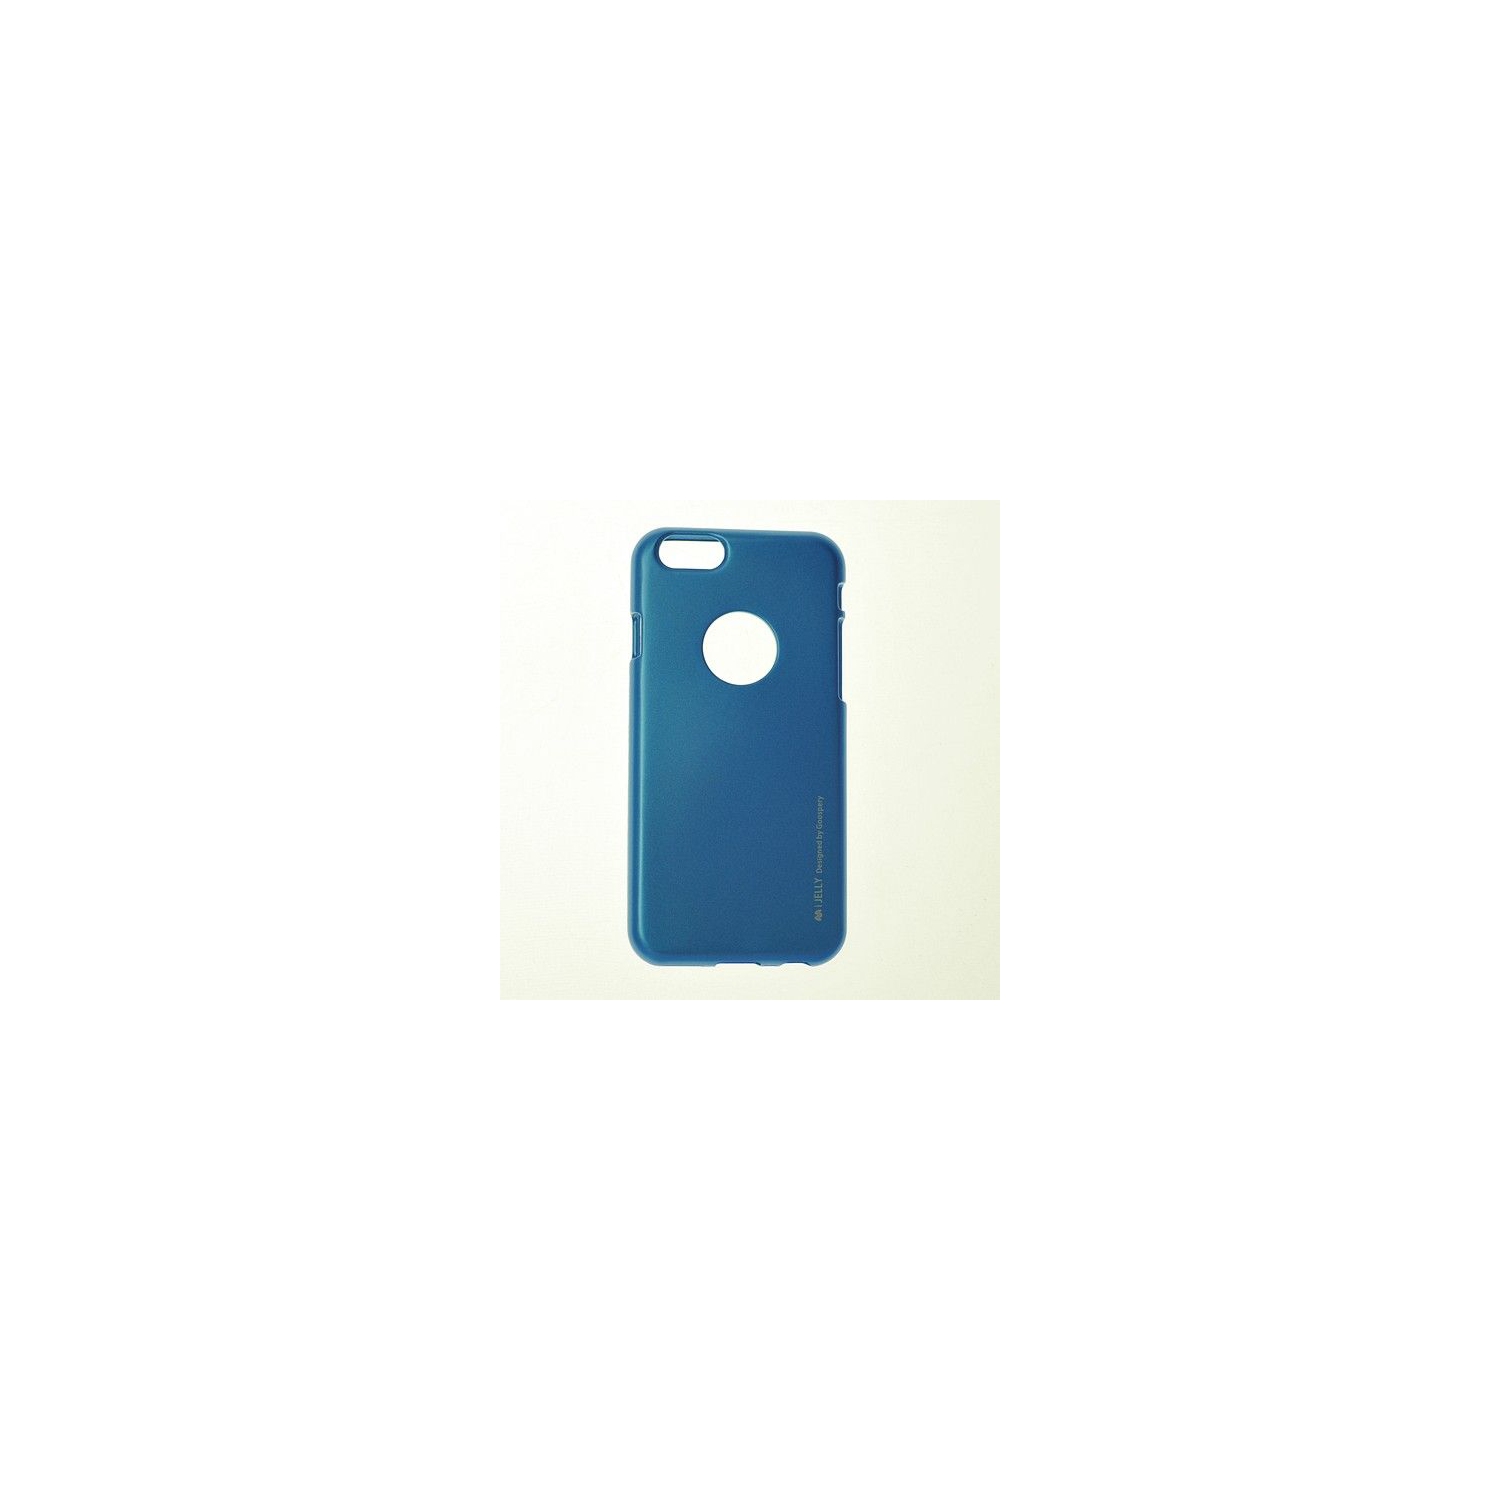 Iphone 5/s/SE Goospery iJelly Metal Case, Blue